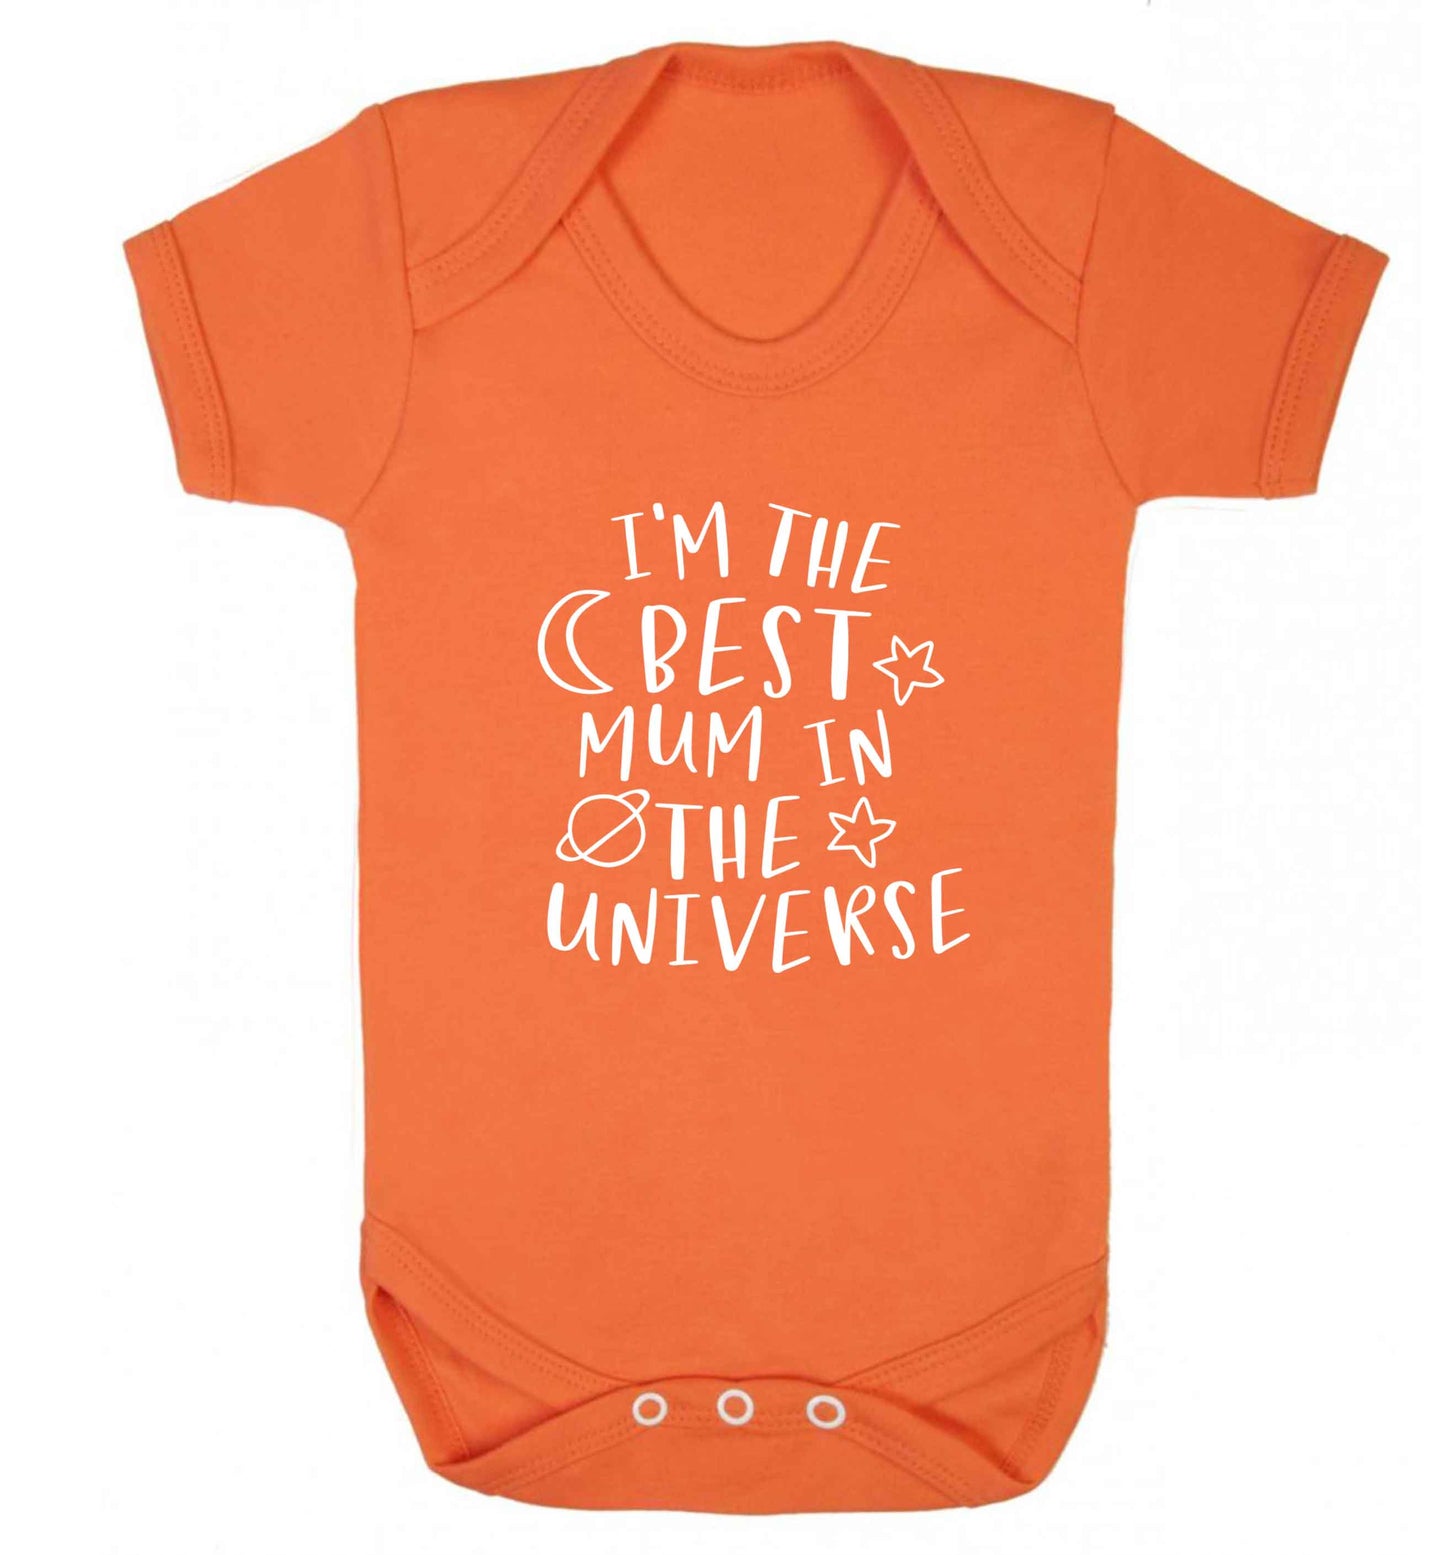 I'm the best mum in the universe baby vest orange 18-24 months